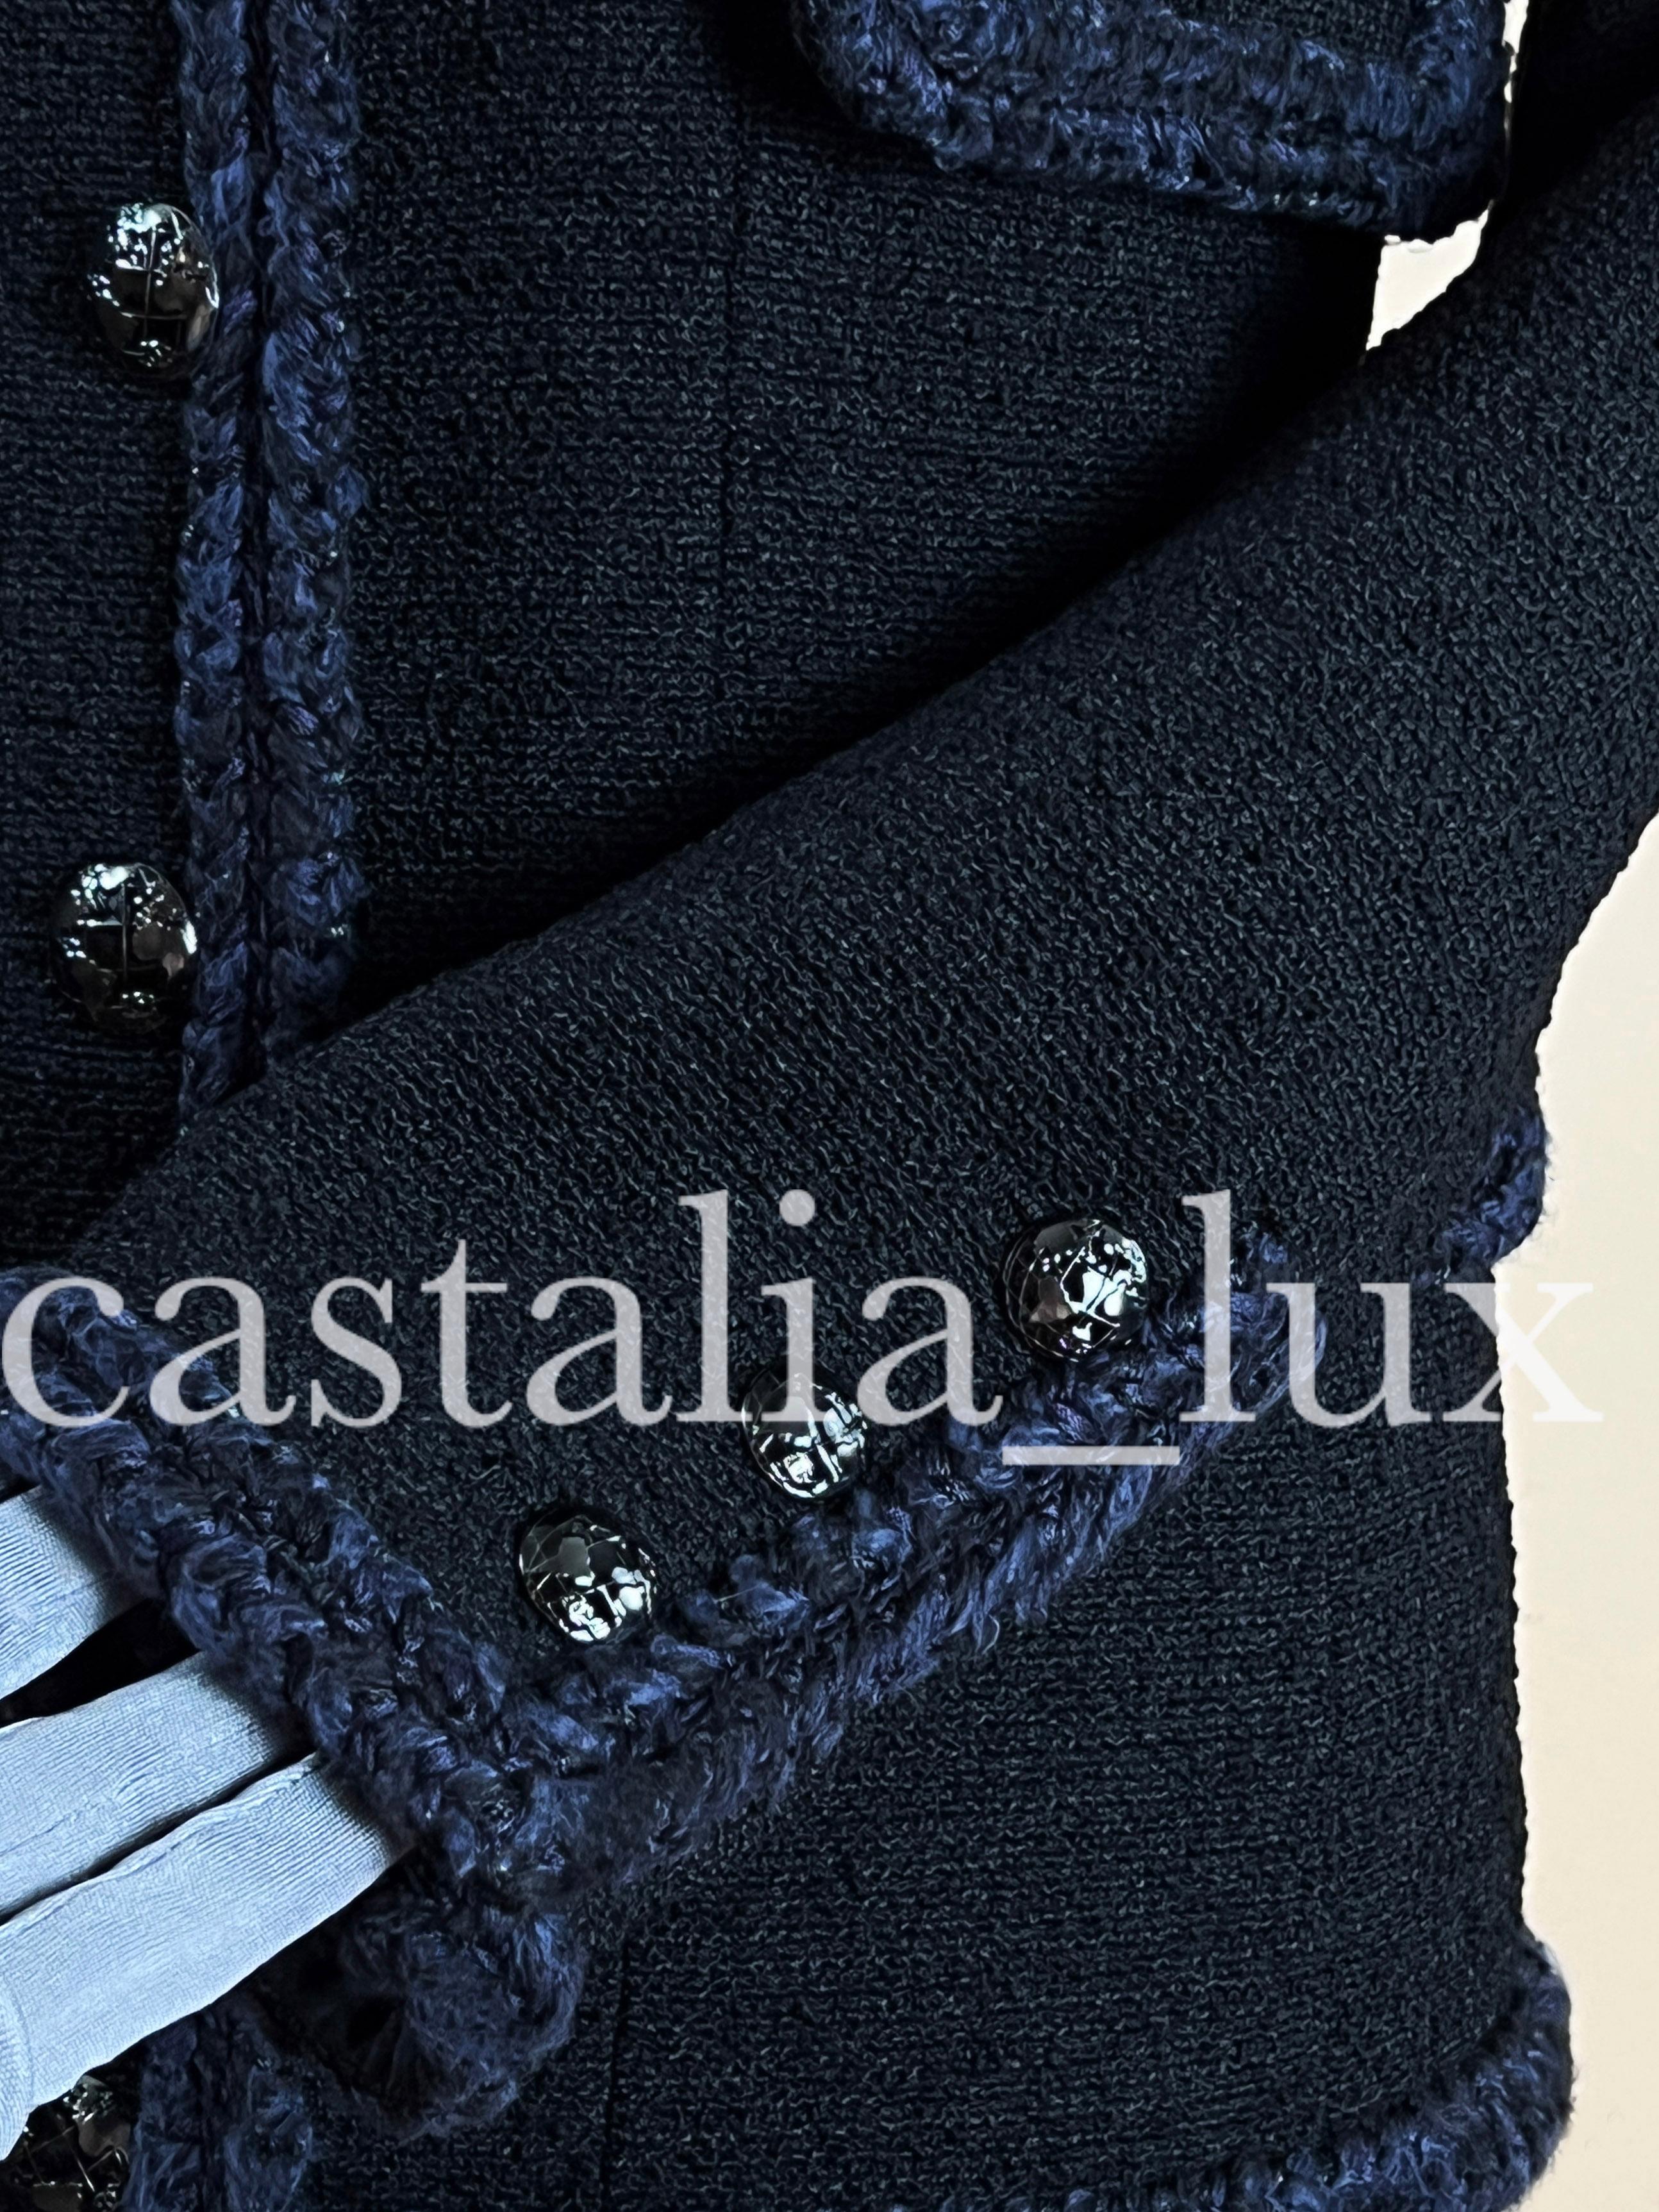 Chanel Iconic Keira Knightley Style Black Tweed Jacket 7